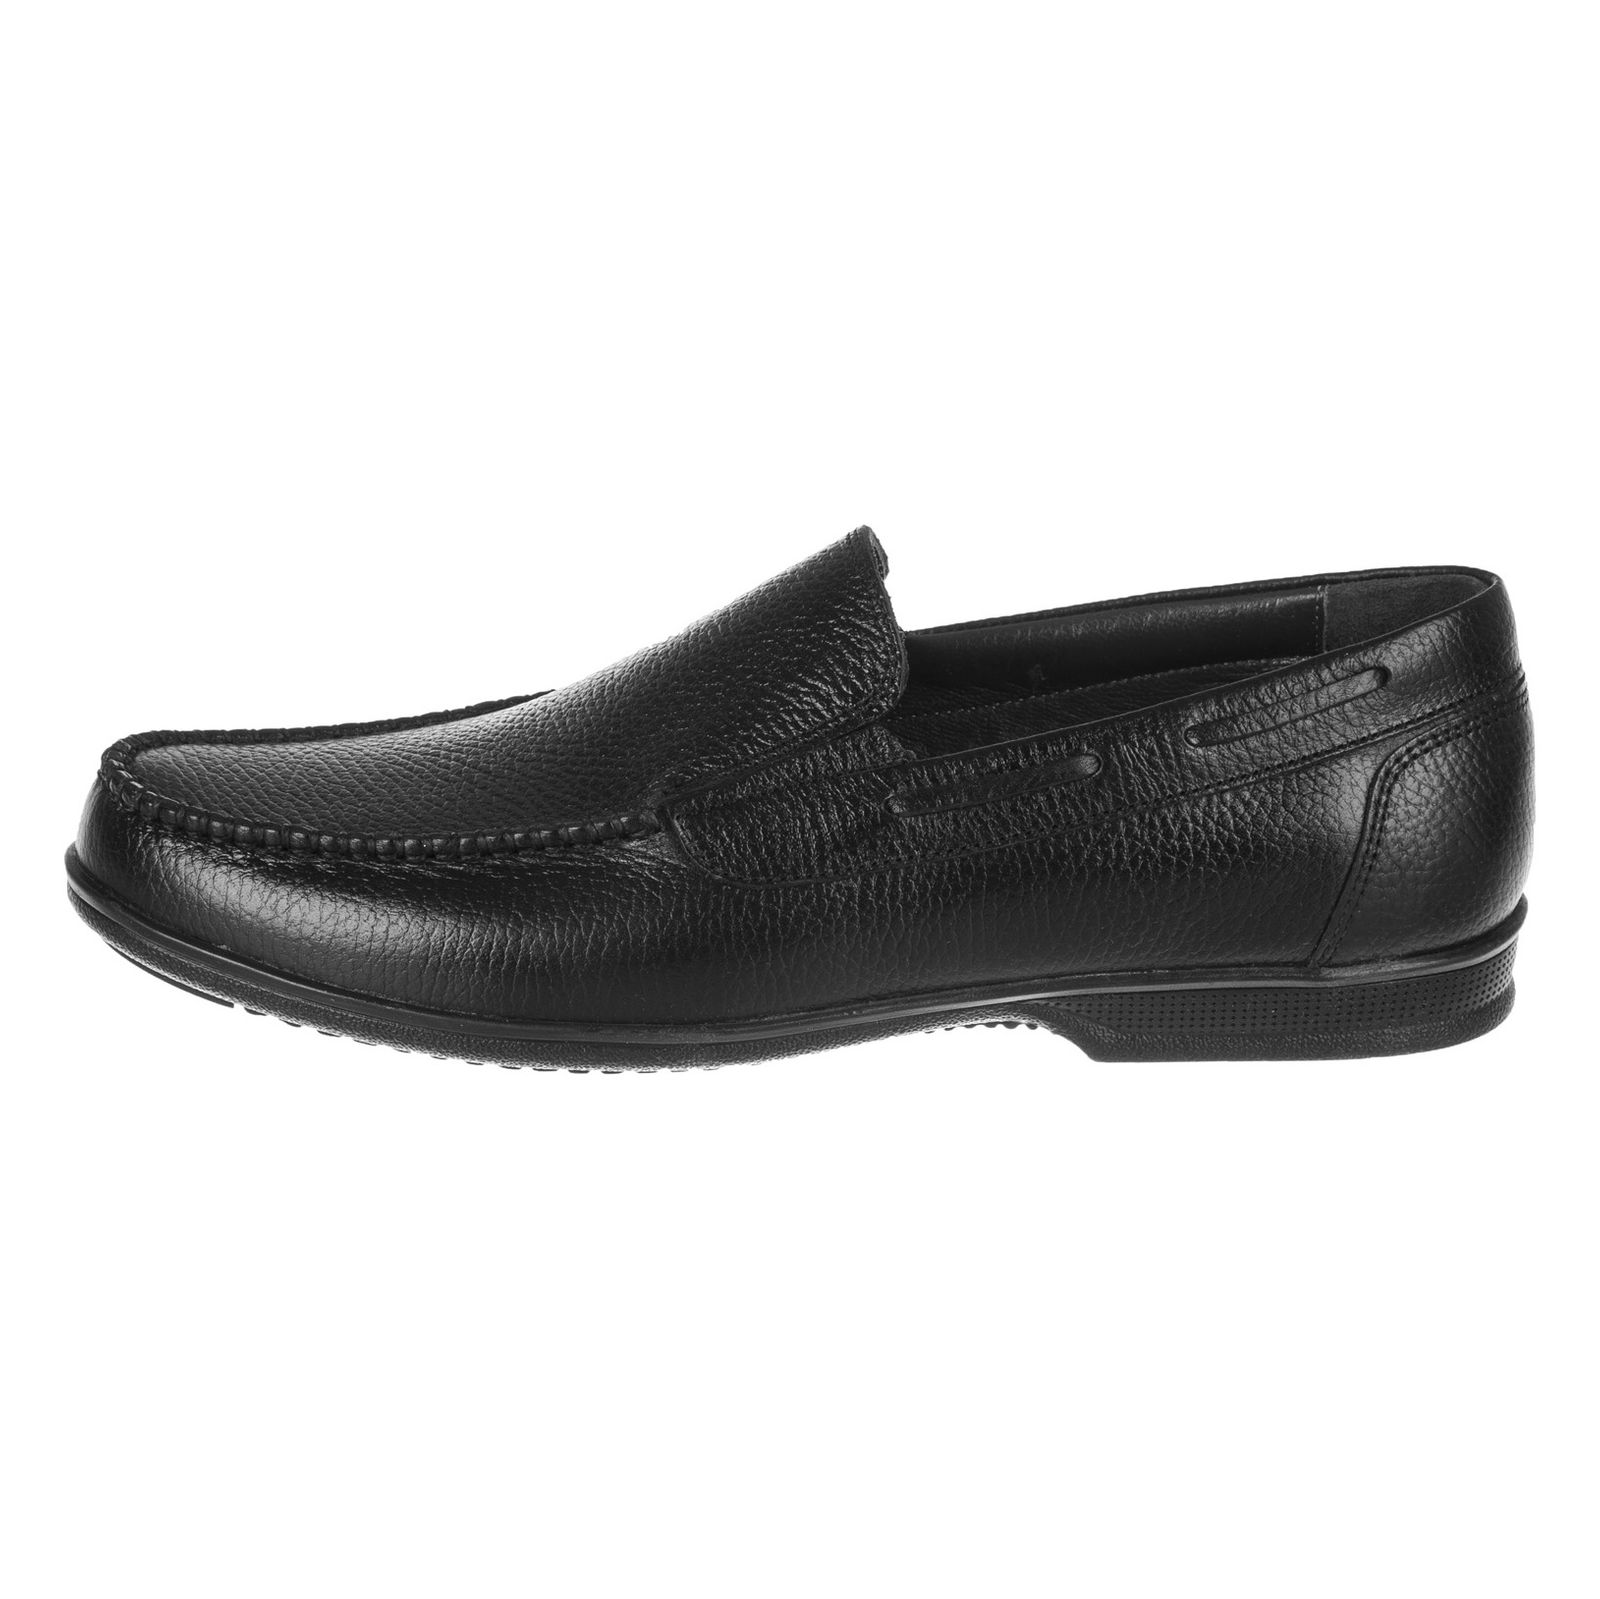 کفش روزمره مردانه دانادل مدل 7001H503101 - مشکی - 2